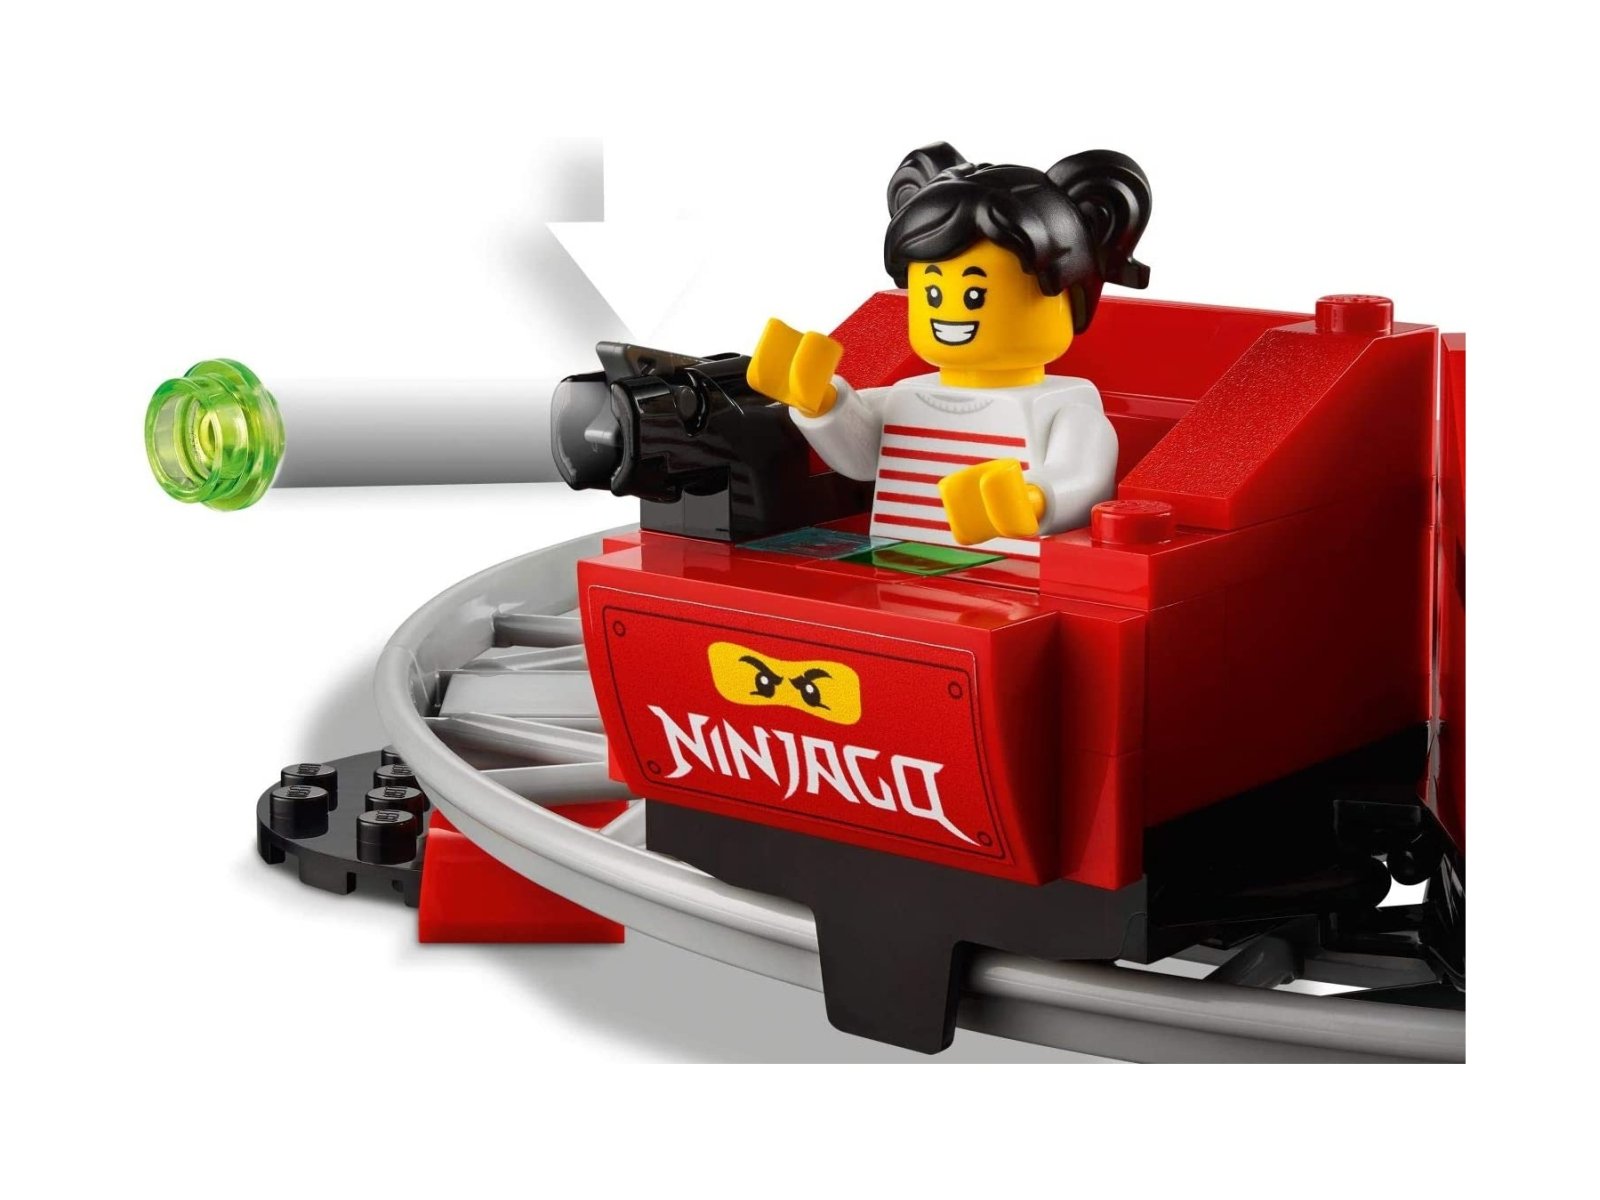 LEGO 40429 Świat NINJAGO®